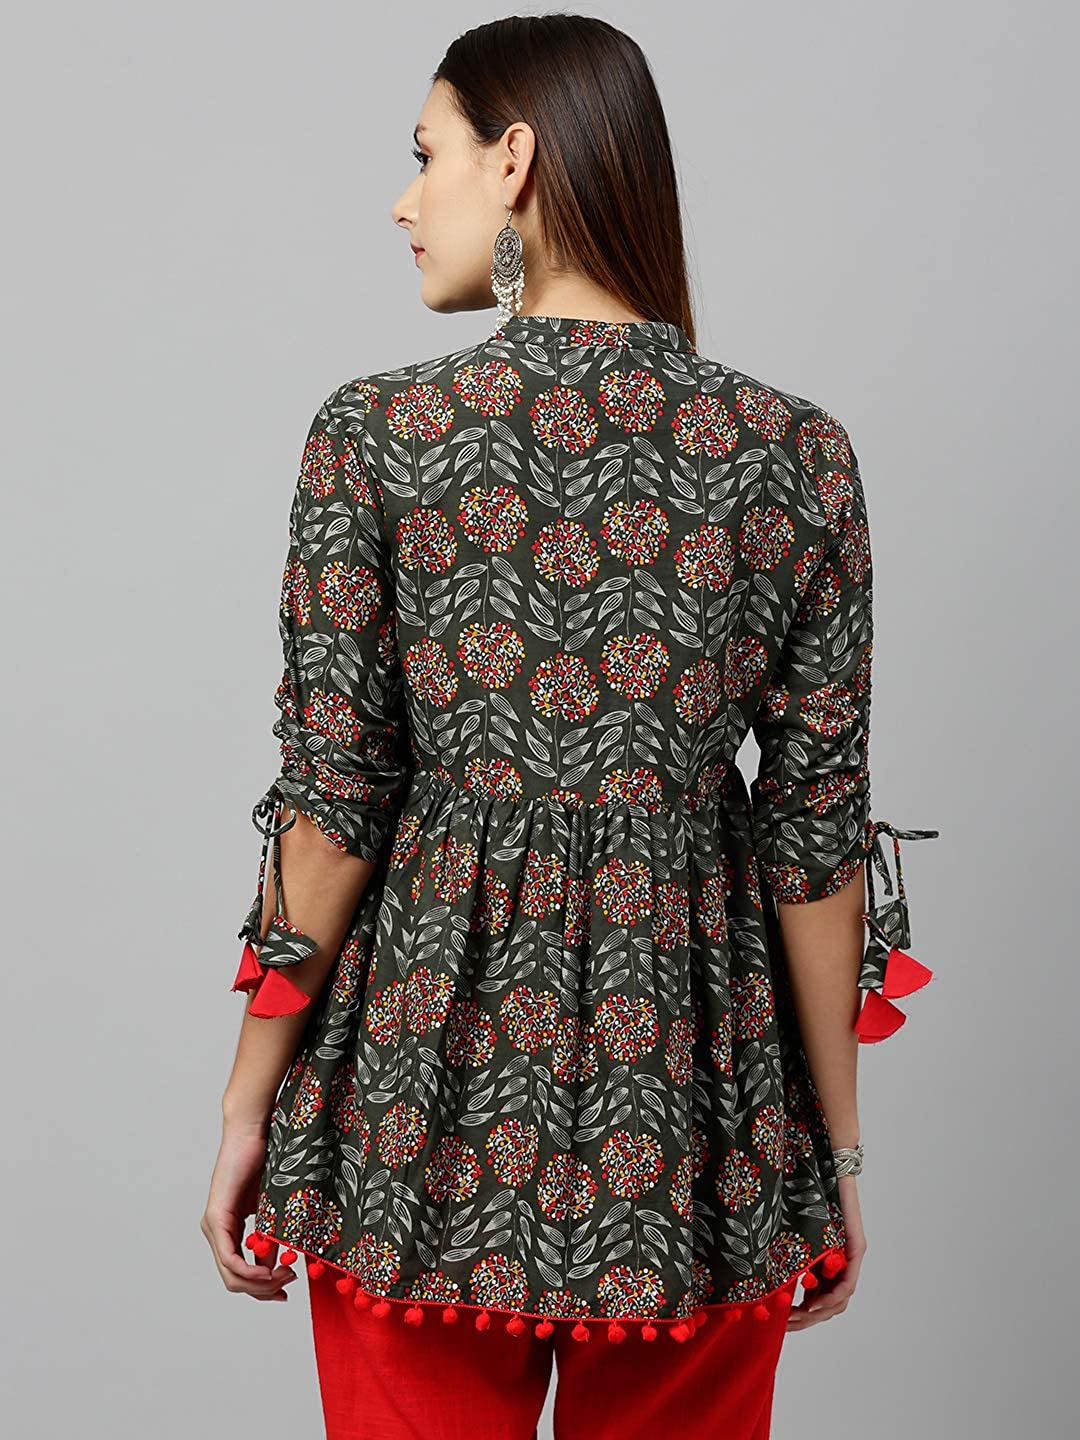 KIPEK Women's Cotton Floral Print Regular Wear Top -  Dresses in Sri Lanka from Arcade Online Shopping - Just Rs. 5499!